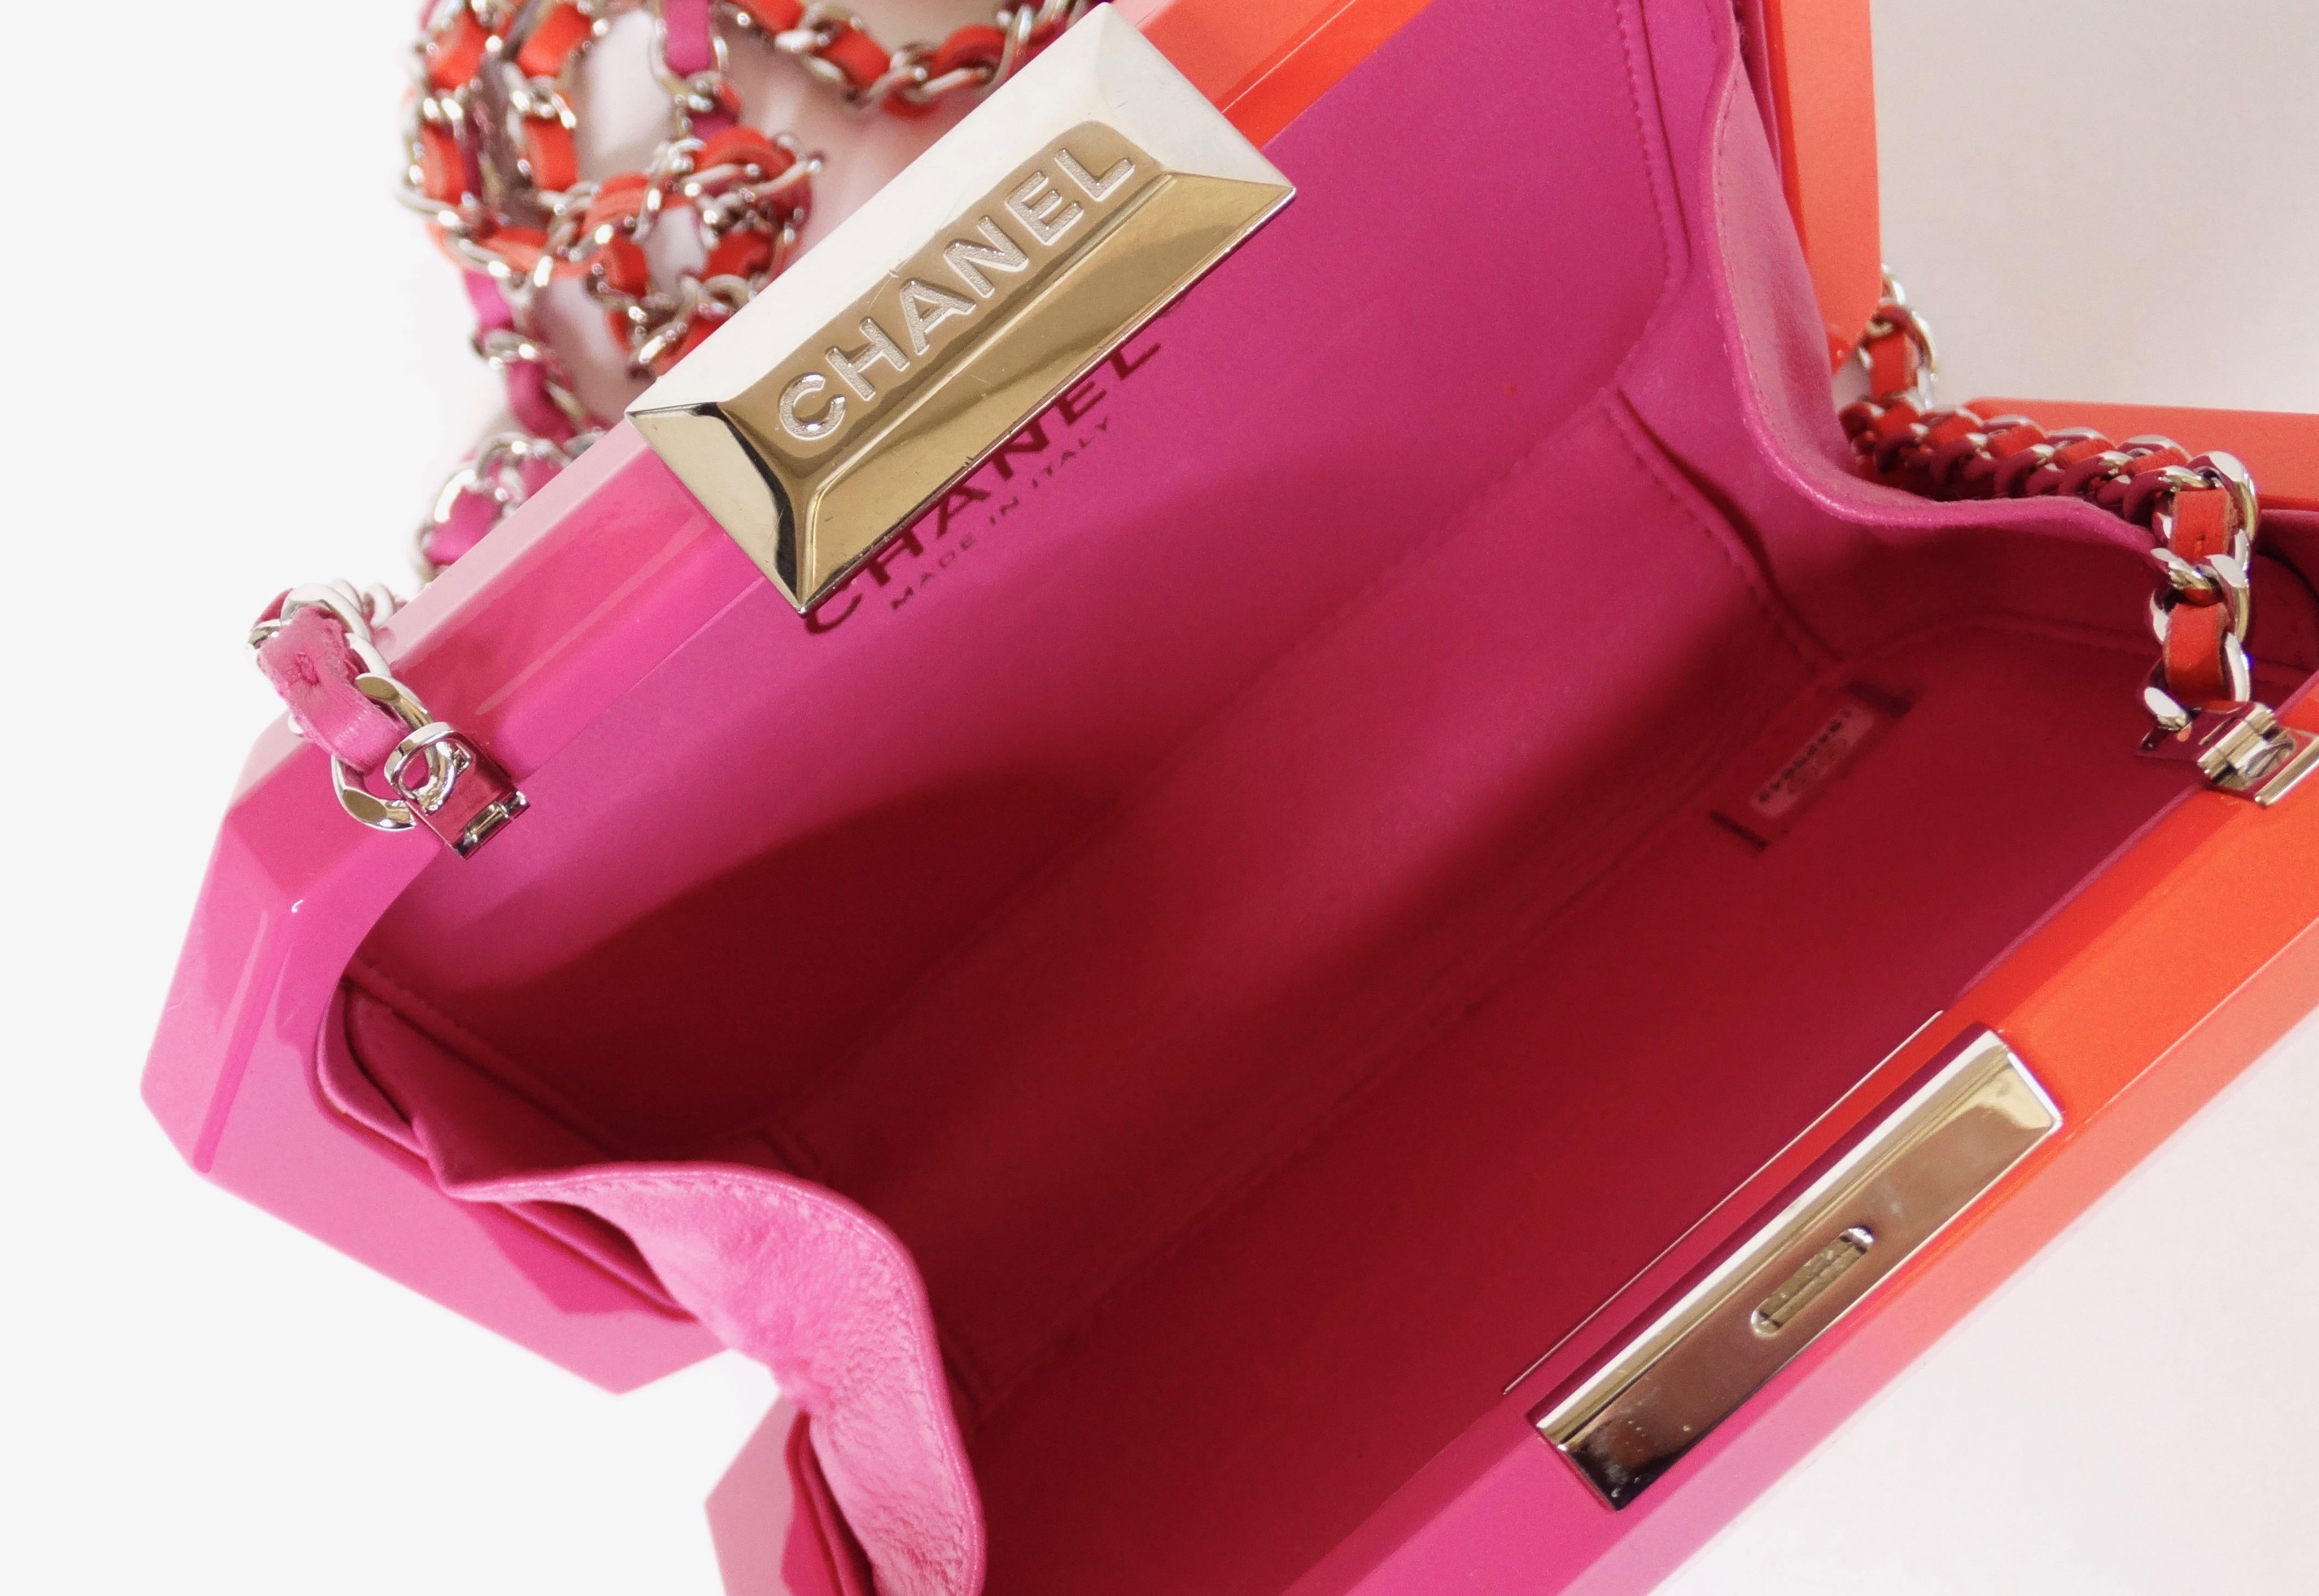 Chanel Runway Minaudière Ombre Pink & Orange Hard Shell Handbag 9